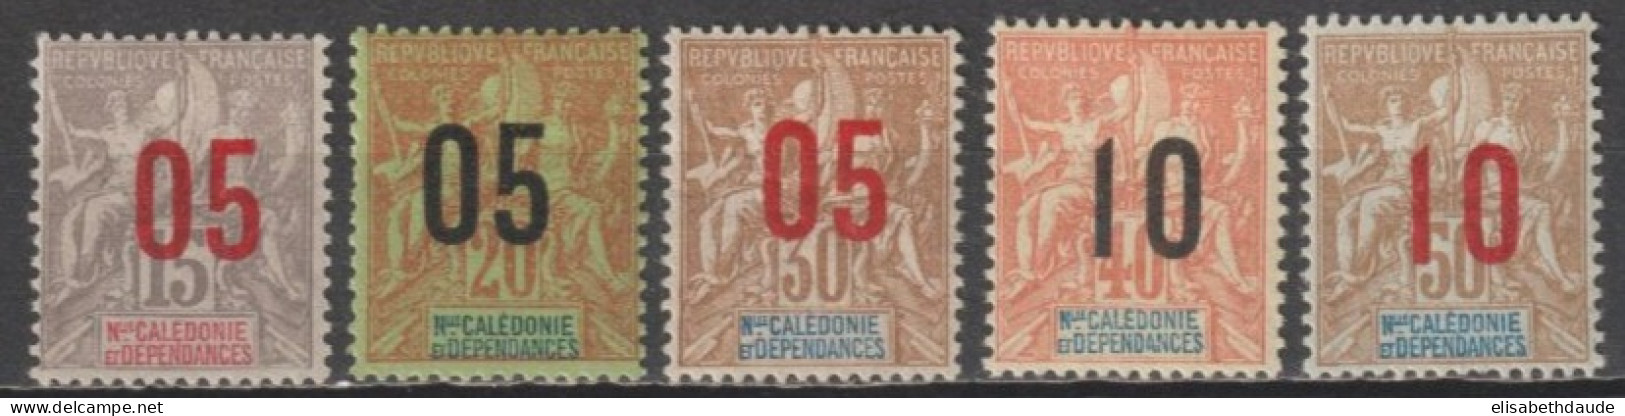 NOUVELLE CALEDONIE - 1912 - SERIE COMPLETE YVERT N°105/109 * MLH - COTE = 12.5 EUR - Neufs